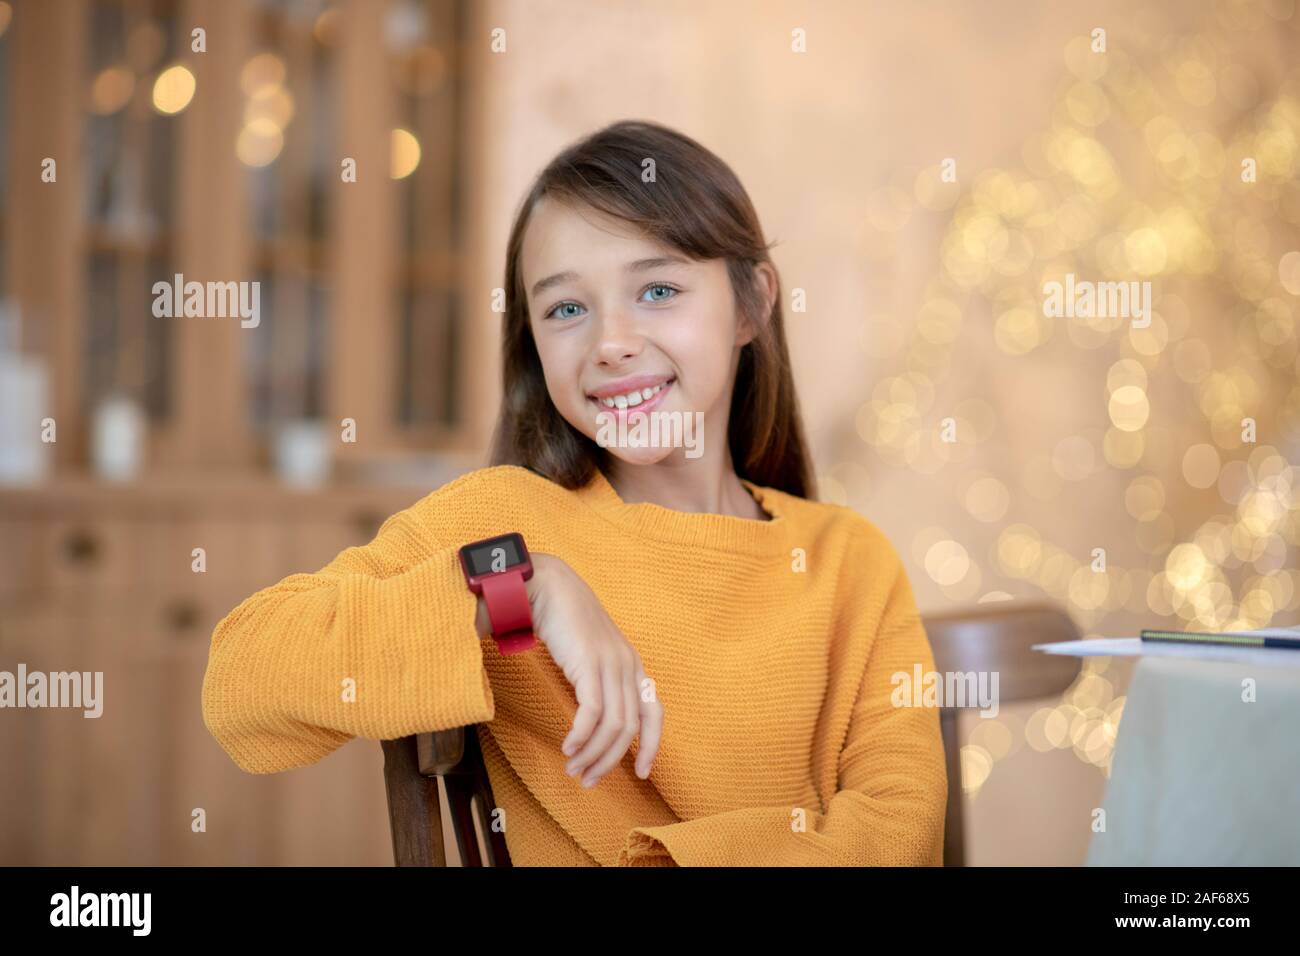 Linda chica en camiseta naranja sonriendo agradablemente Foto de stock